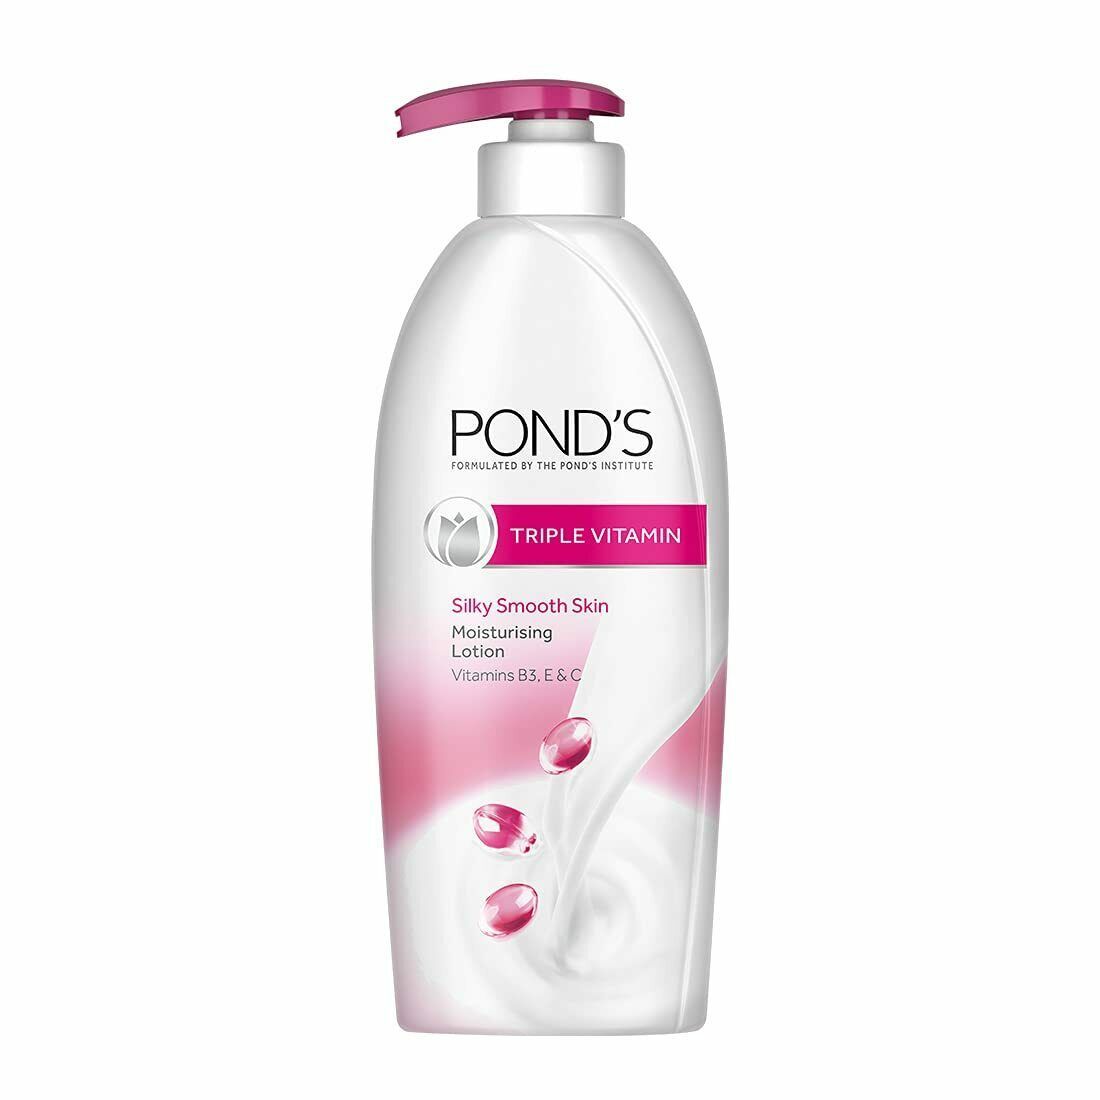 POND'S Triple Vitamin Moisturising Body Lotion 275 ml lotion for silky soft  - $12.38